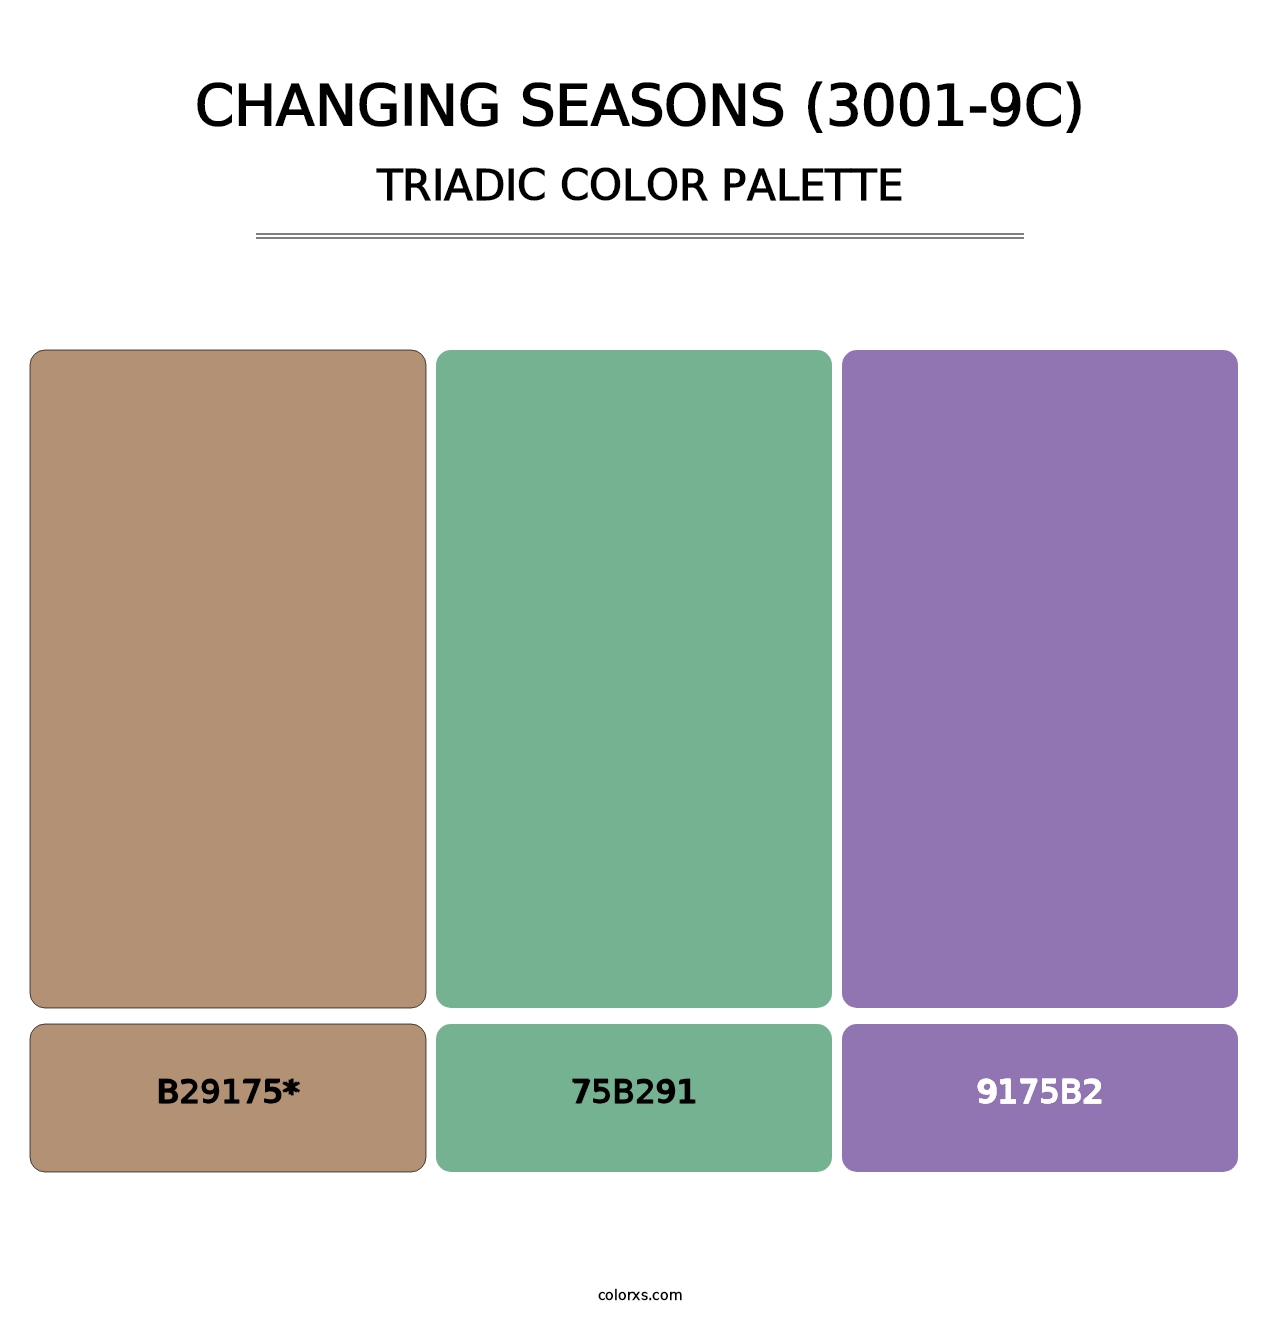 Changing Seasons (3001-9C) - Triadic Color Palette